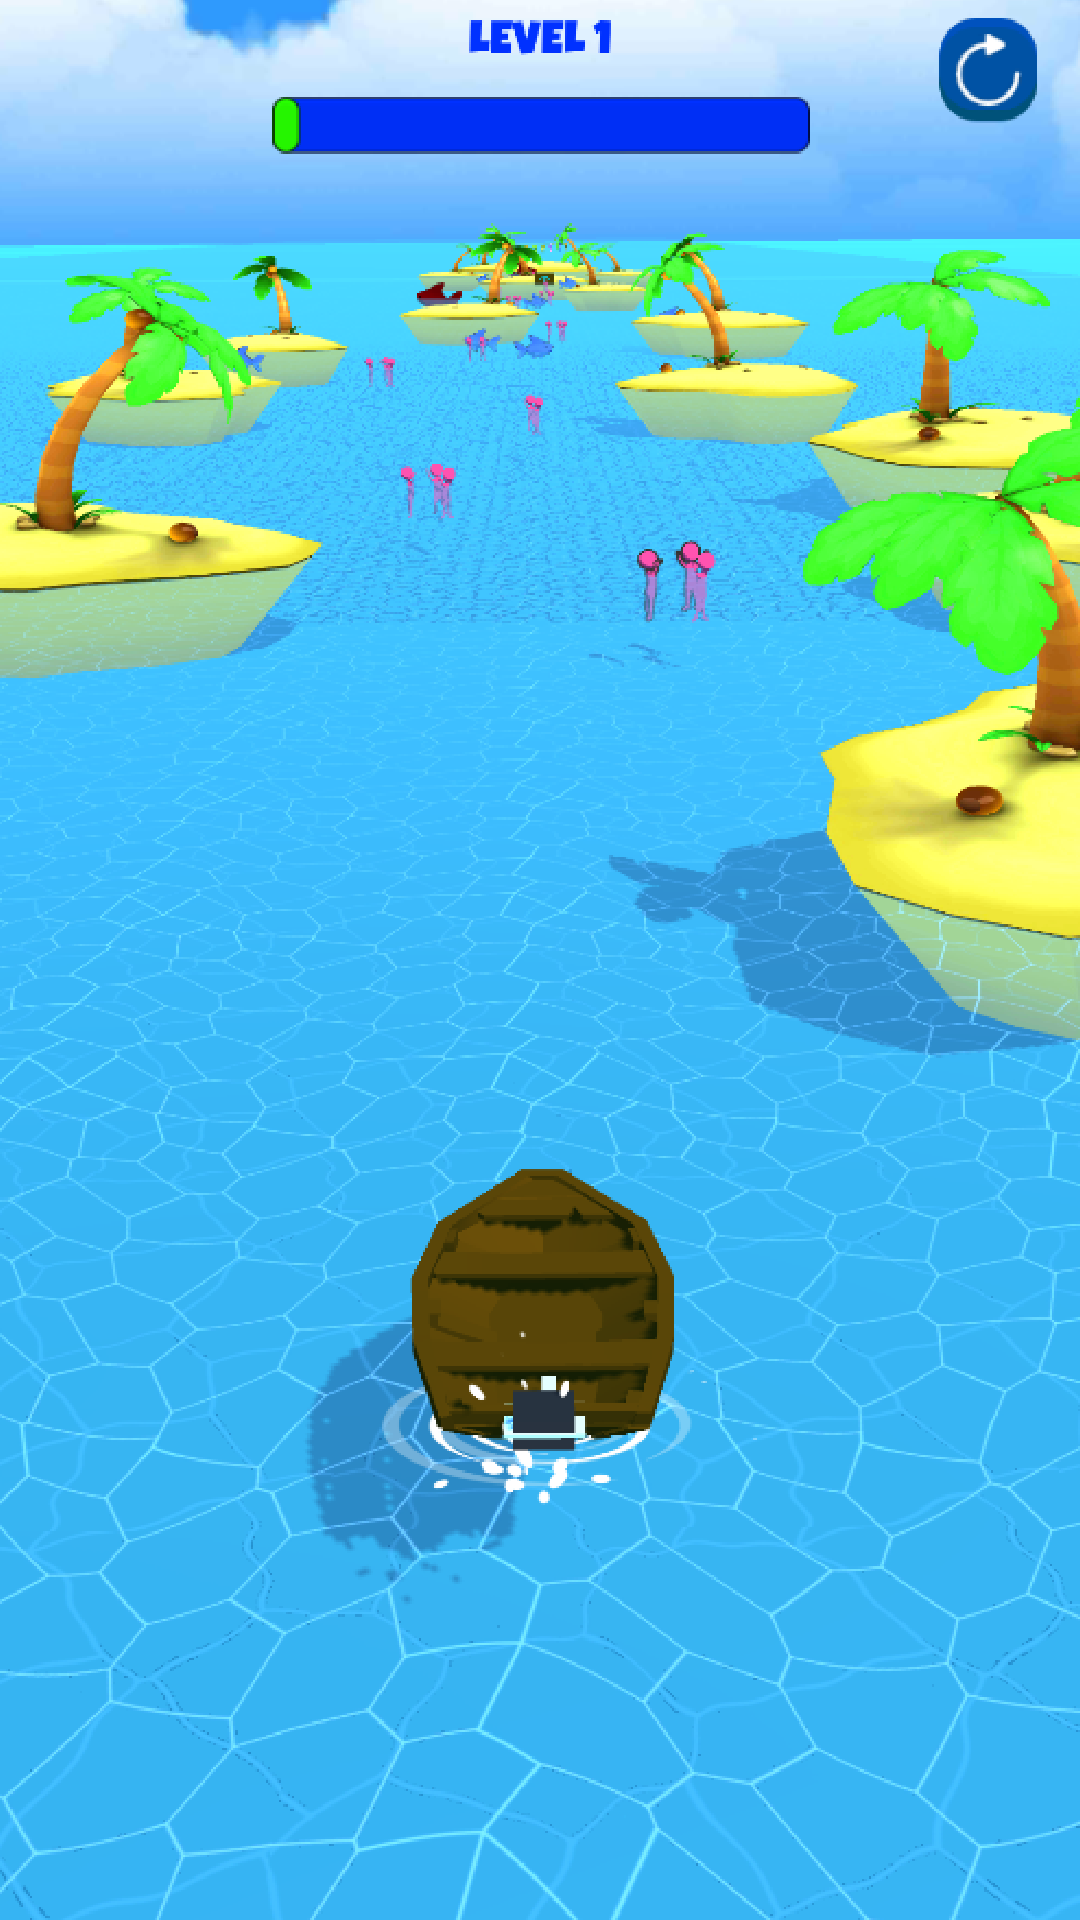 Screenshot of BoatGame Rescue Boat Simulator